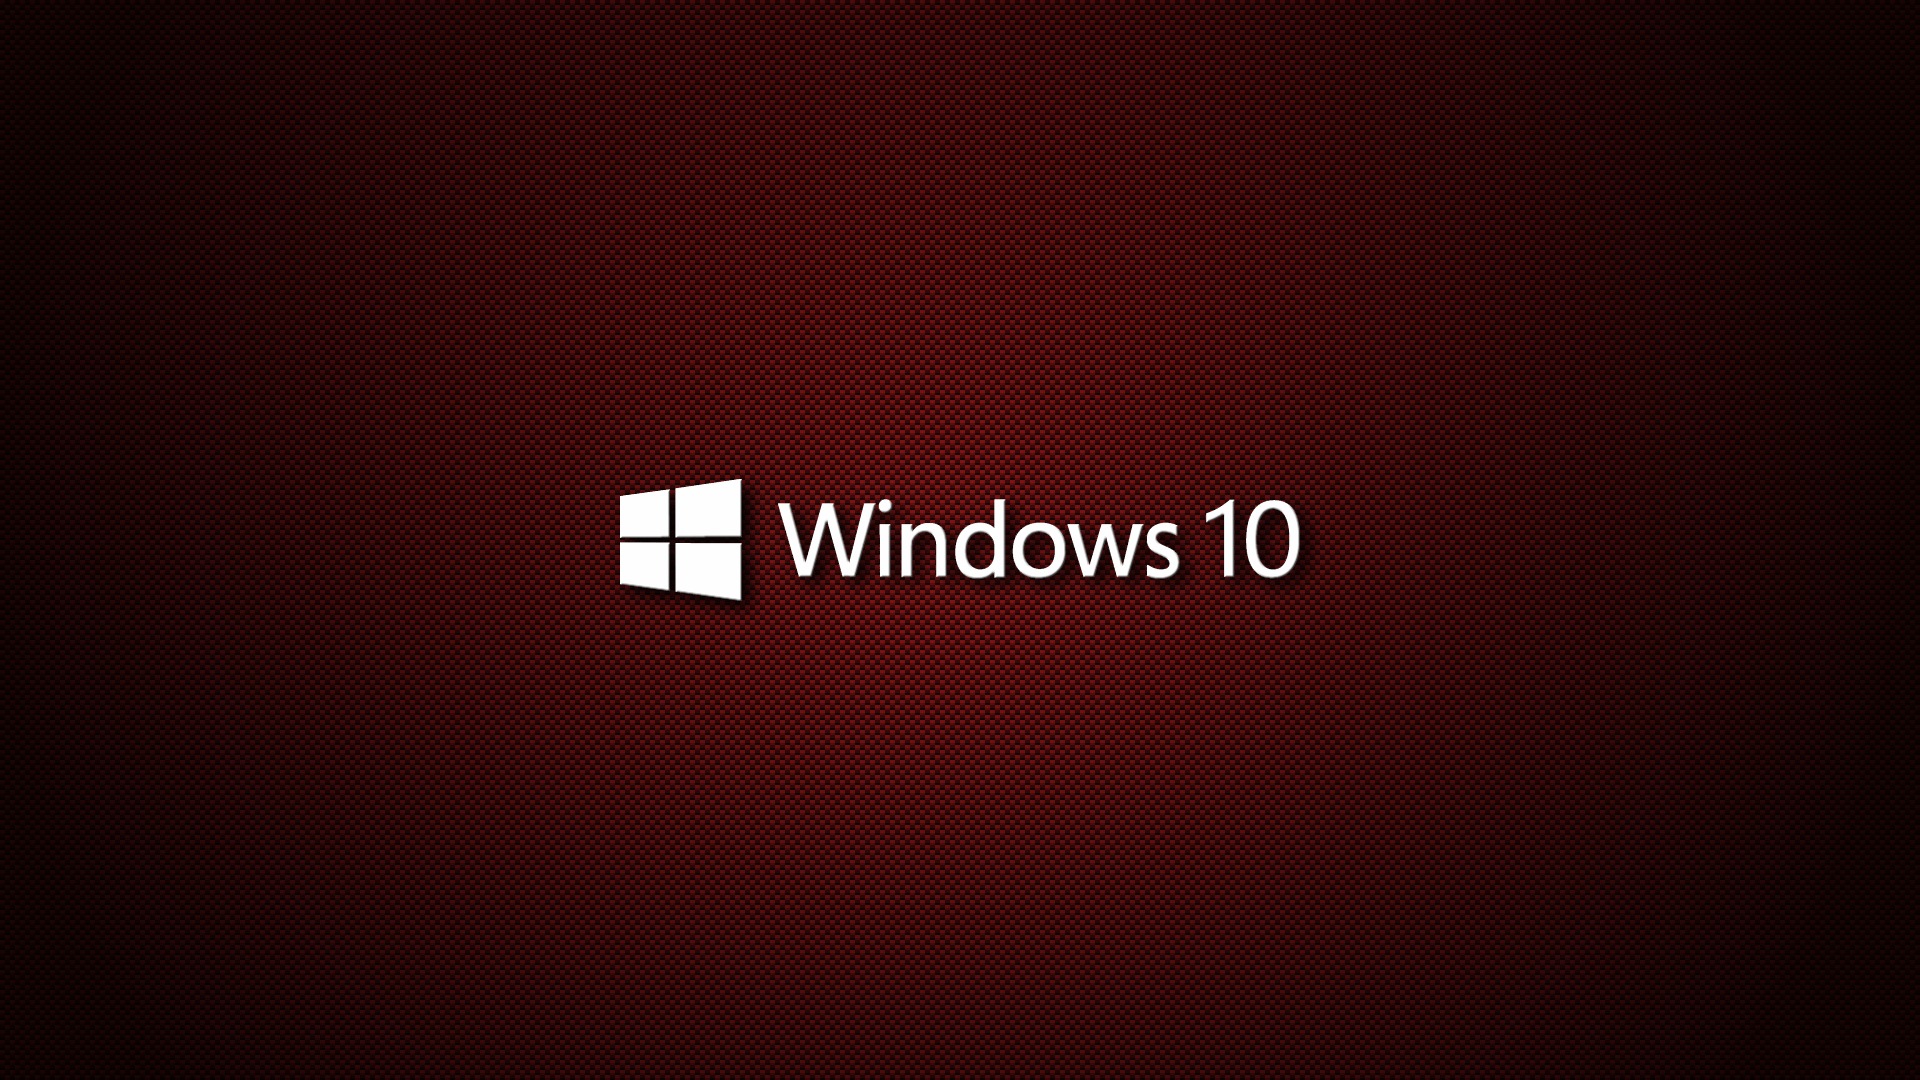 Windows 10 Wallpaper Red carbon   HD Wallpapers Desktop Wallpaper 1920x1080